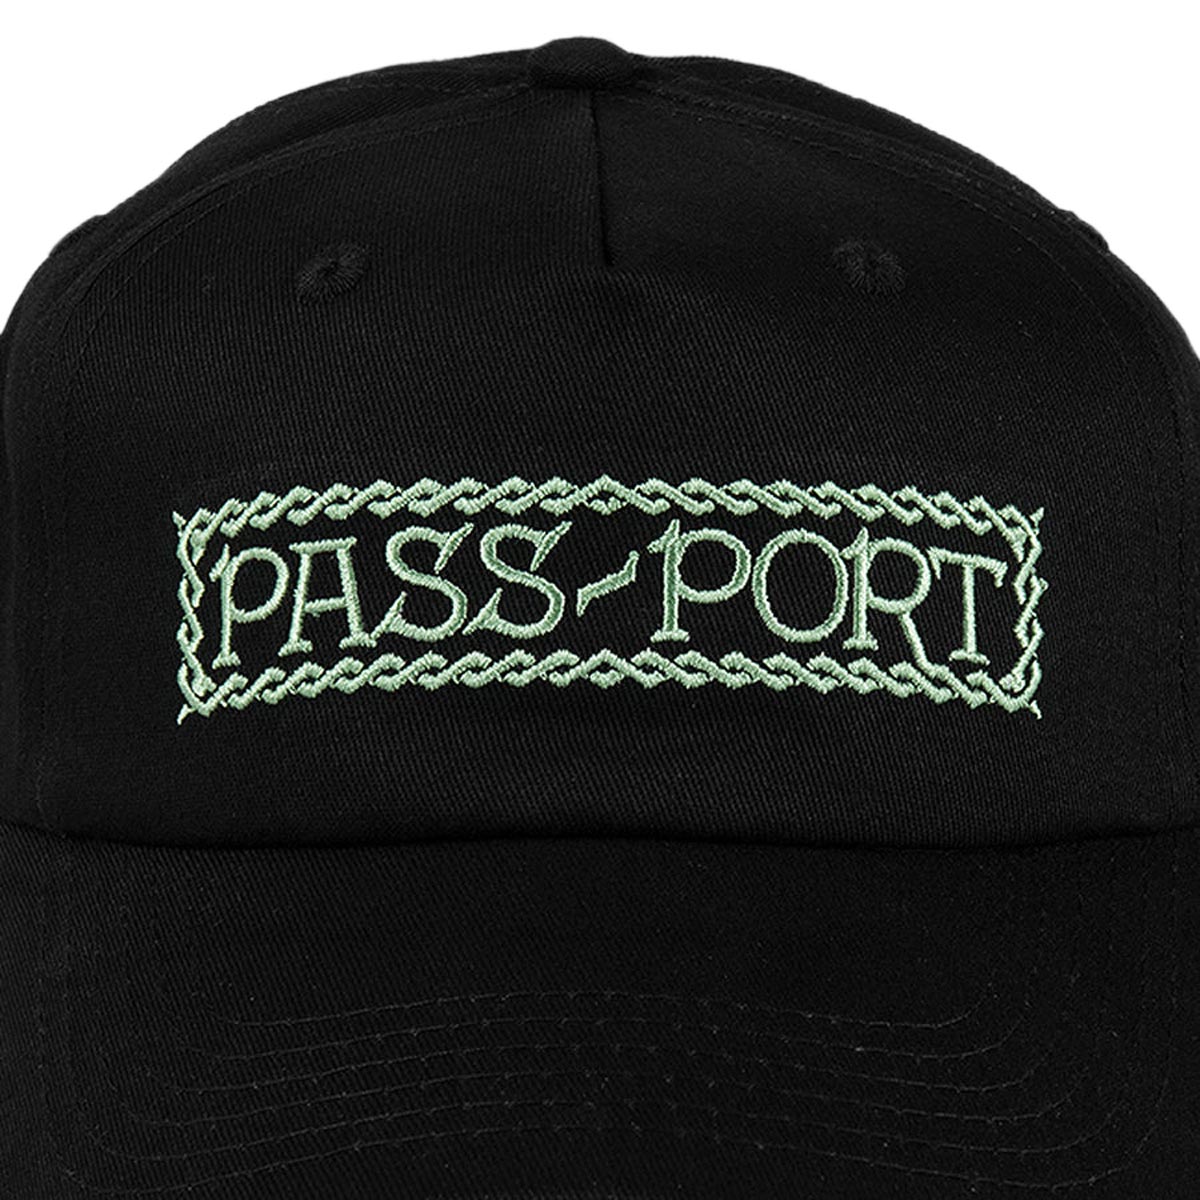 Passport Invasive Logo Freight Hat - Black image 3